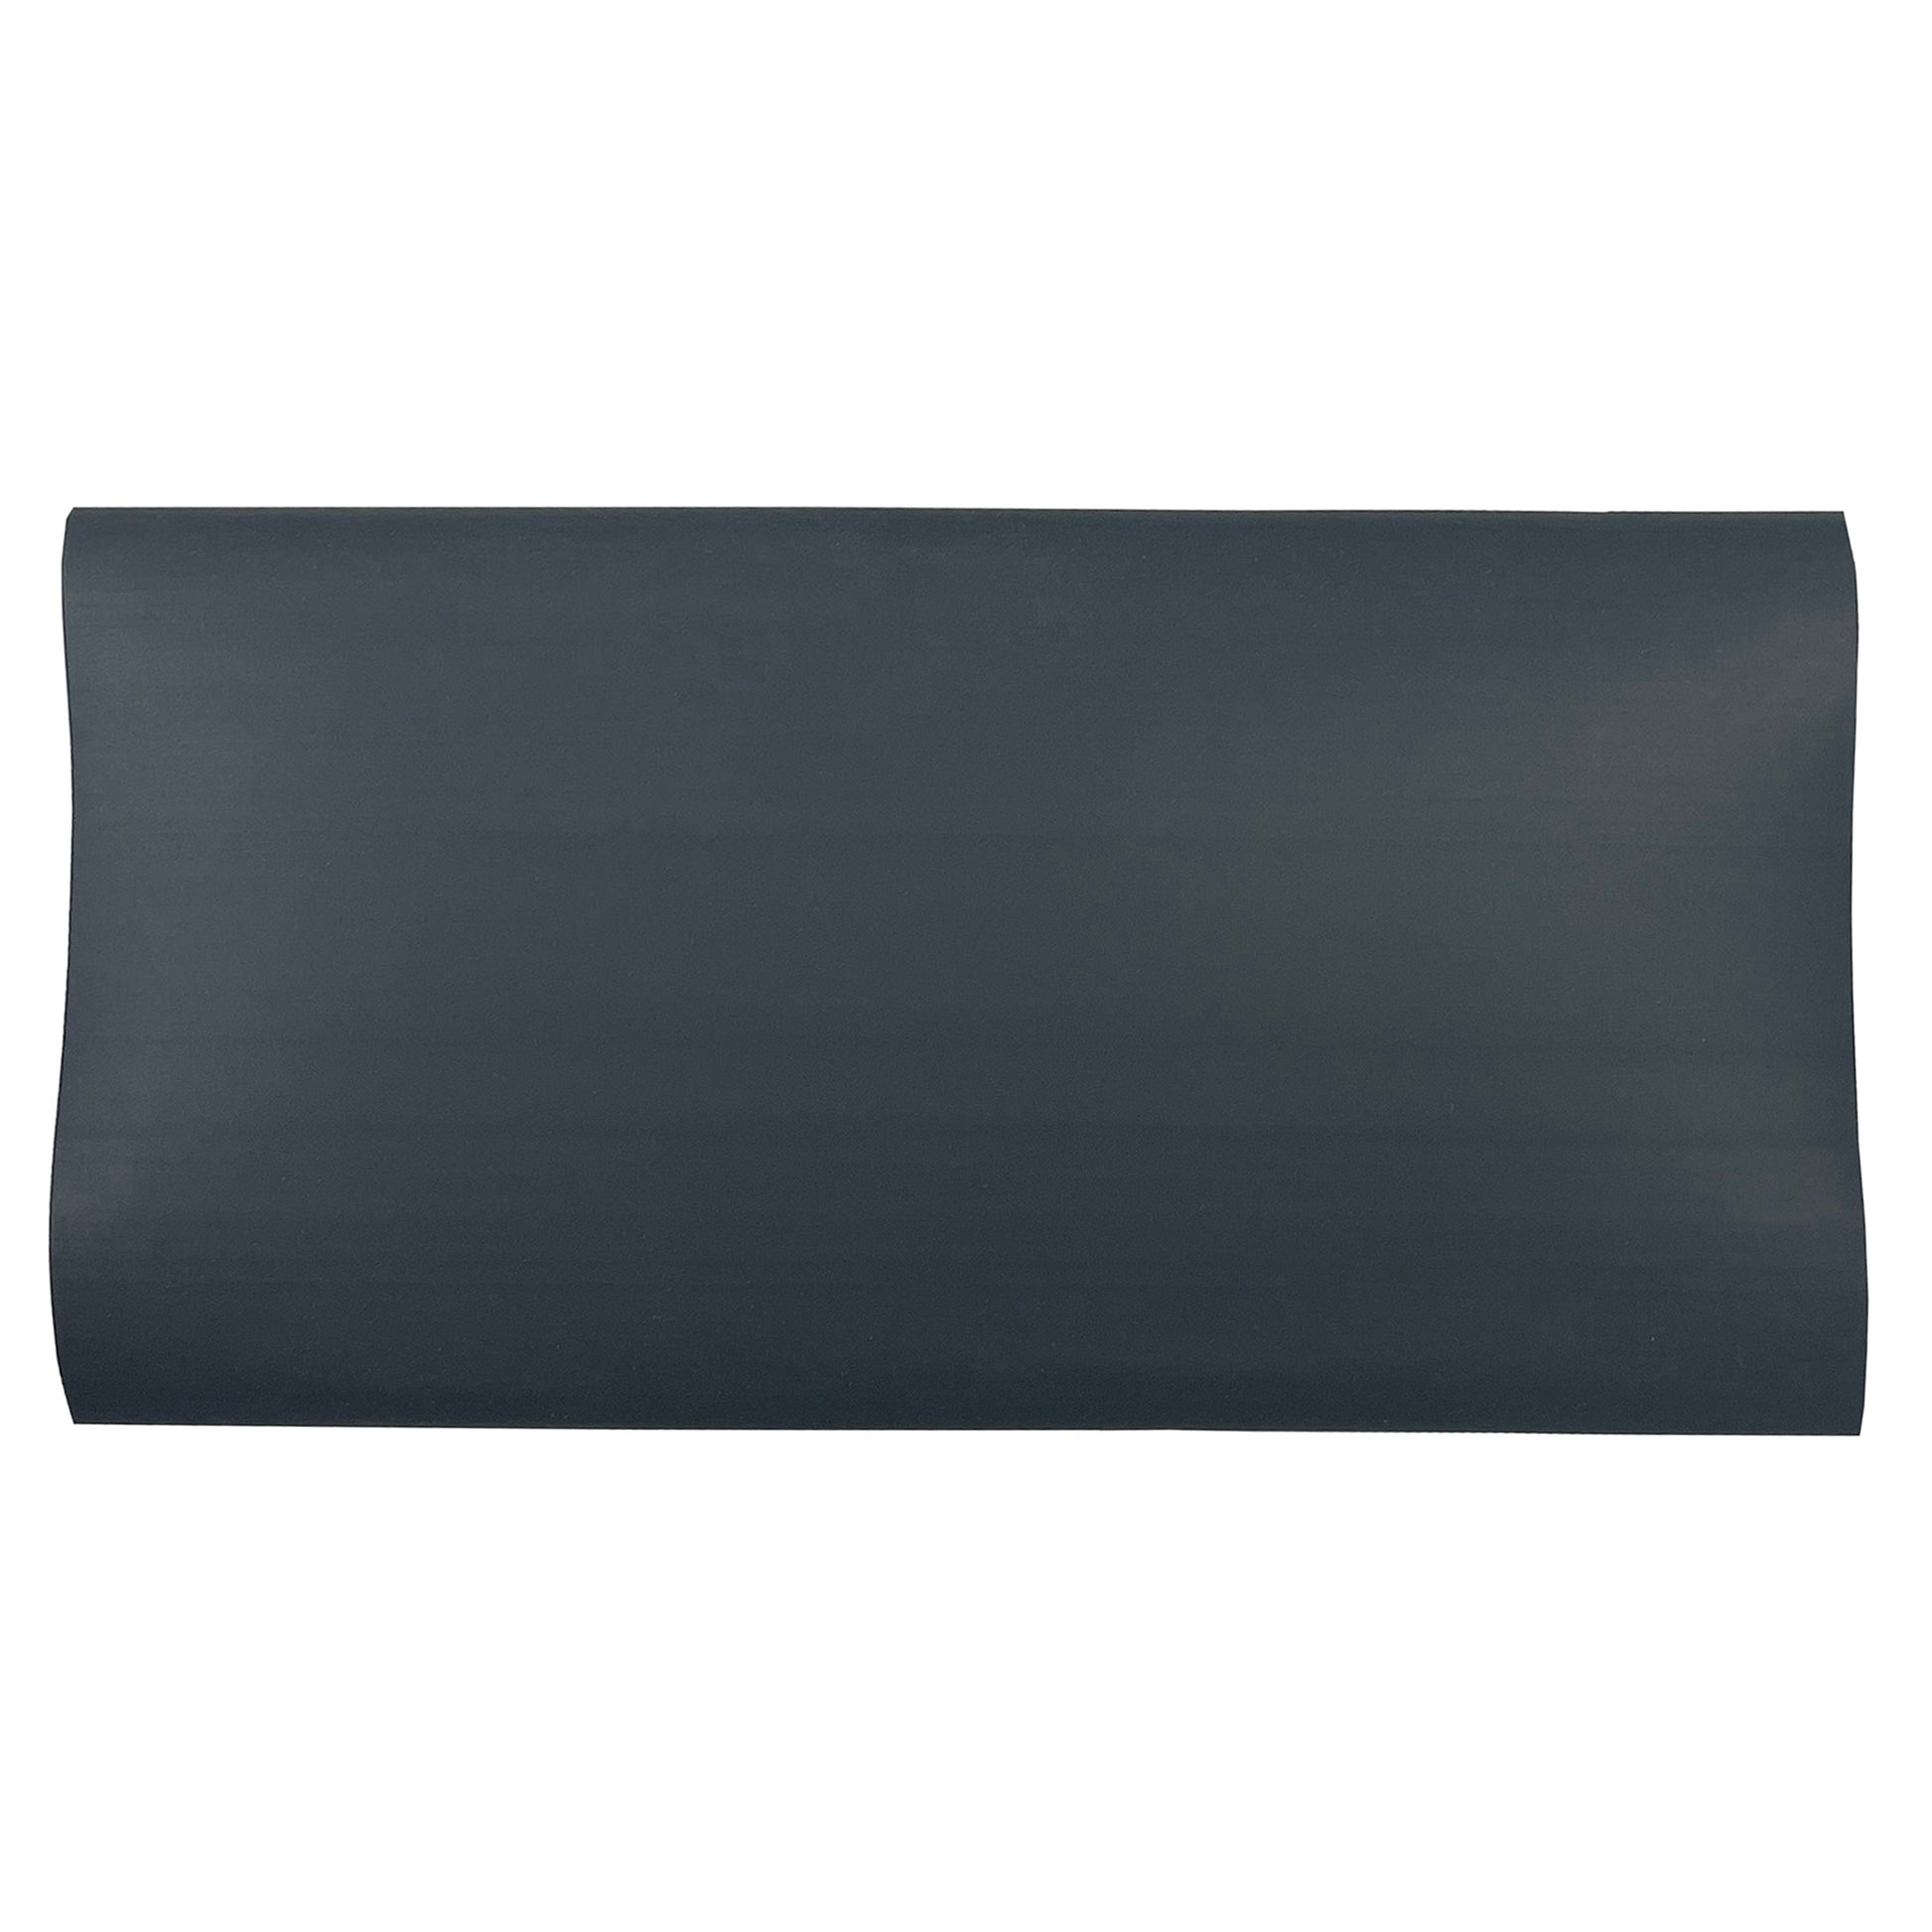 Flexible Thin Single Wall Non-Adhesive Heat Shrink Tubing 2:1 Black 2" ID - 12" Inch 10 Pack